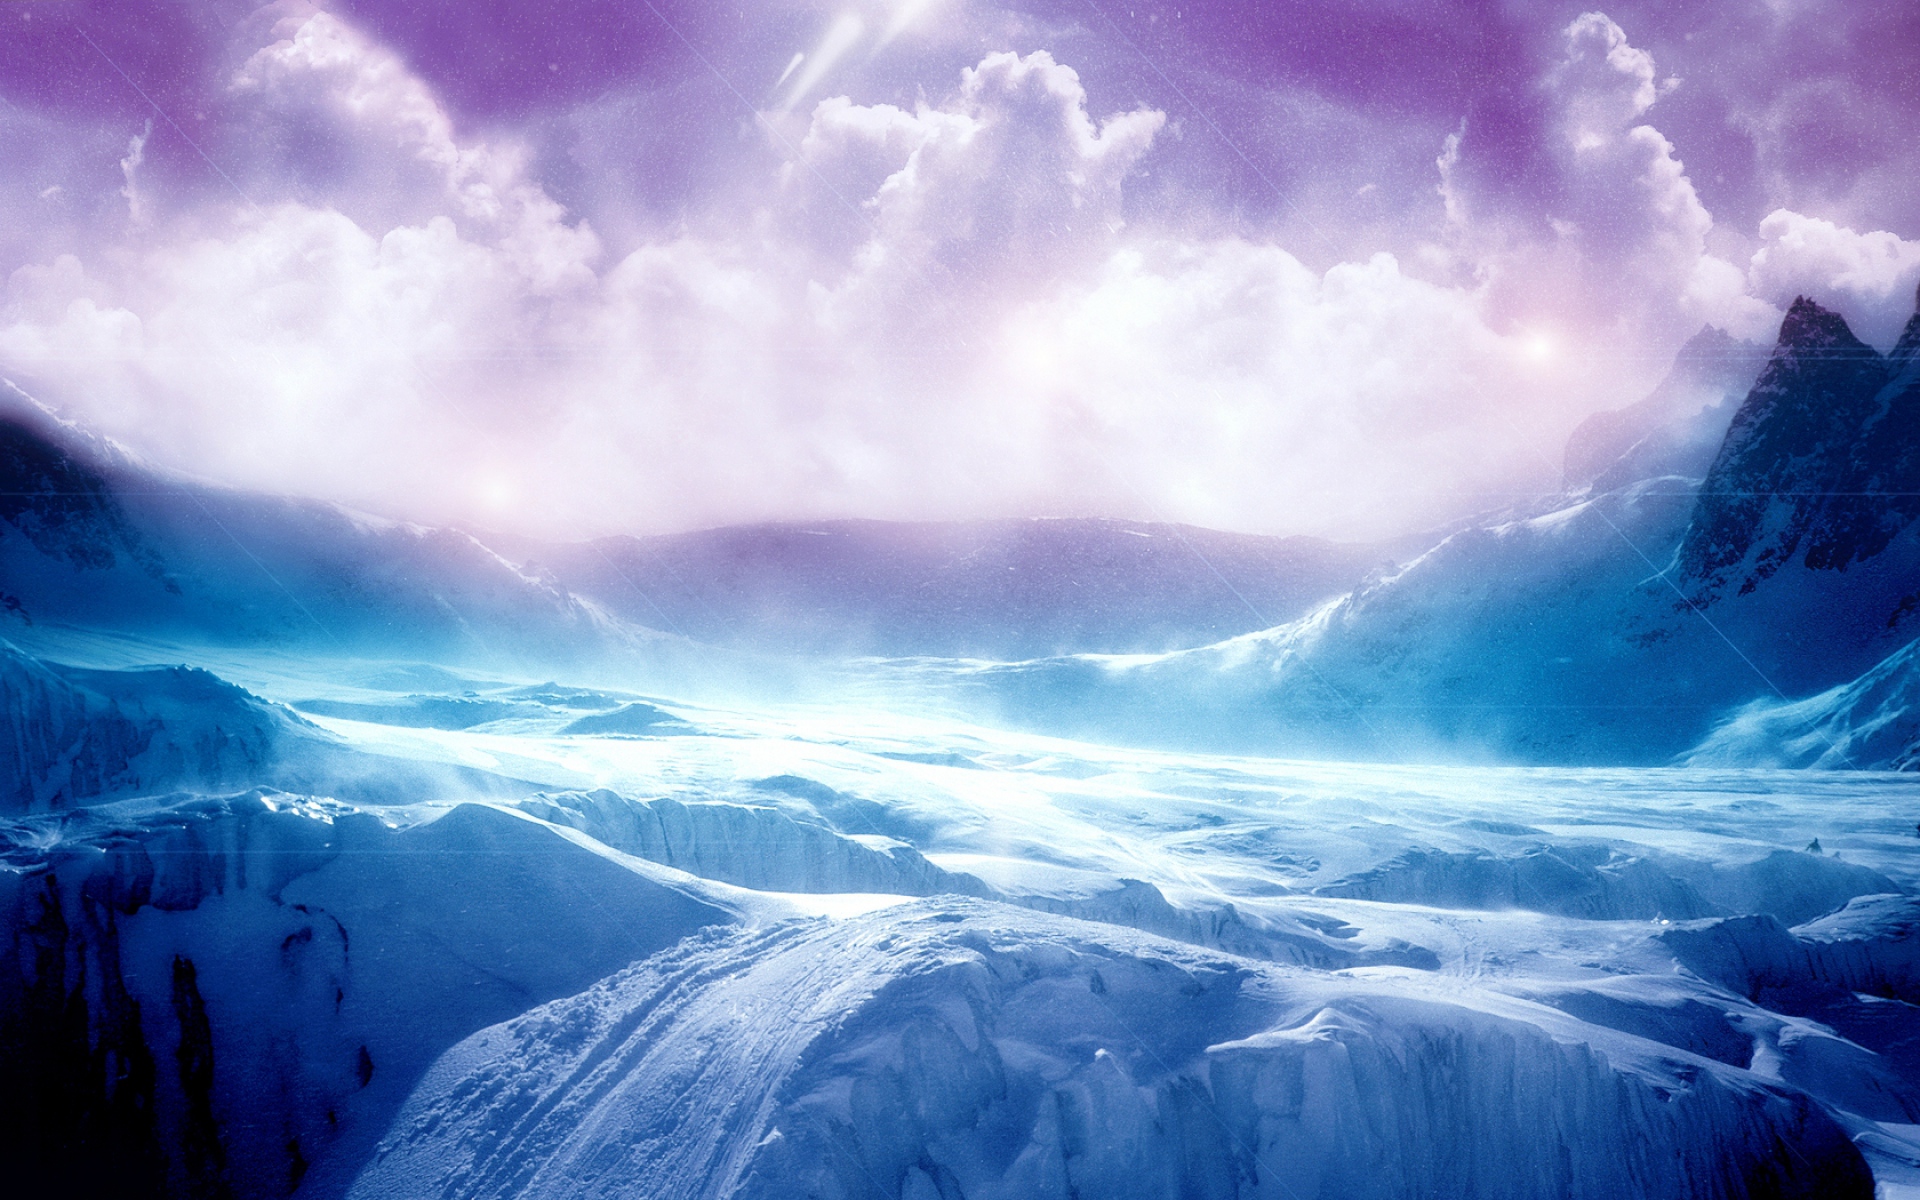 Blue Snow & Purple Sky wallpaper. Blue Snow & Purple Sky